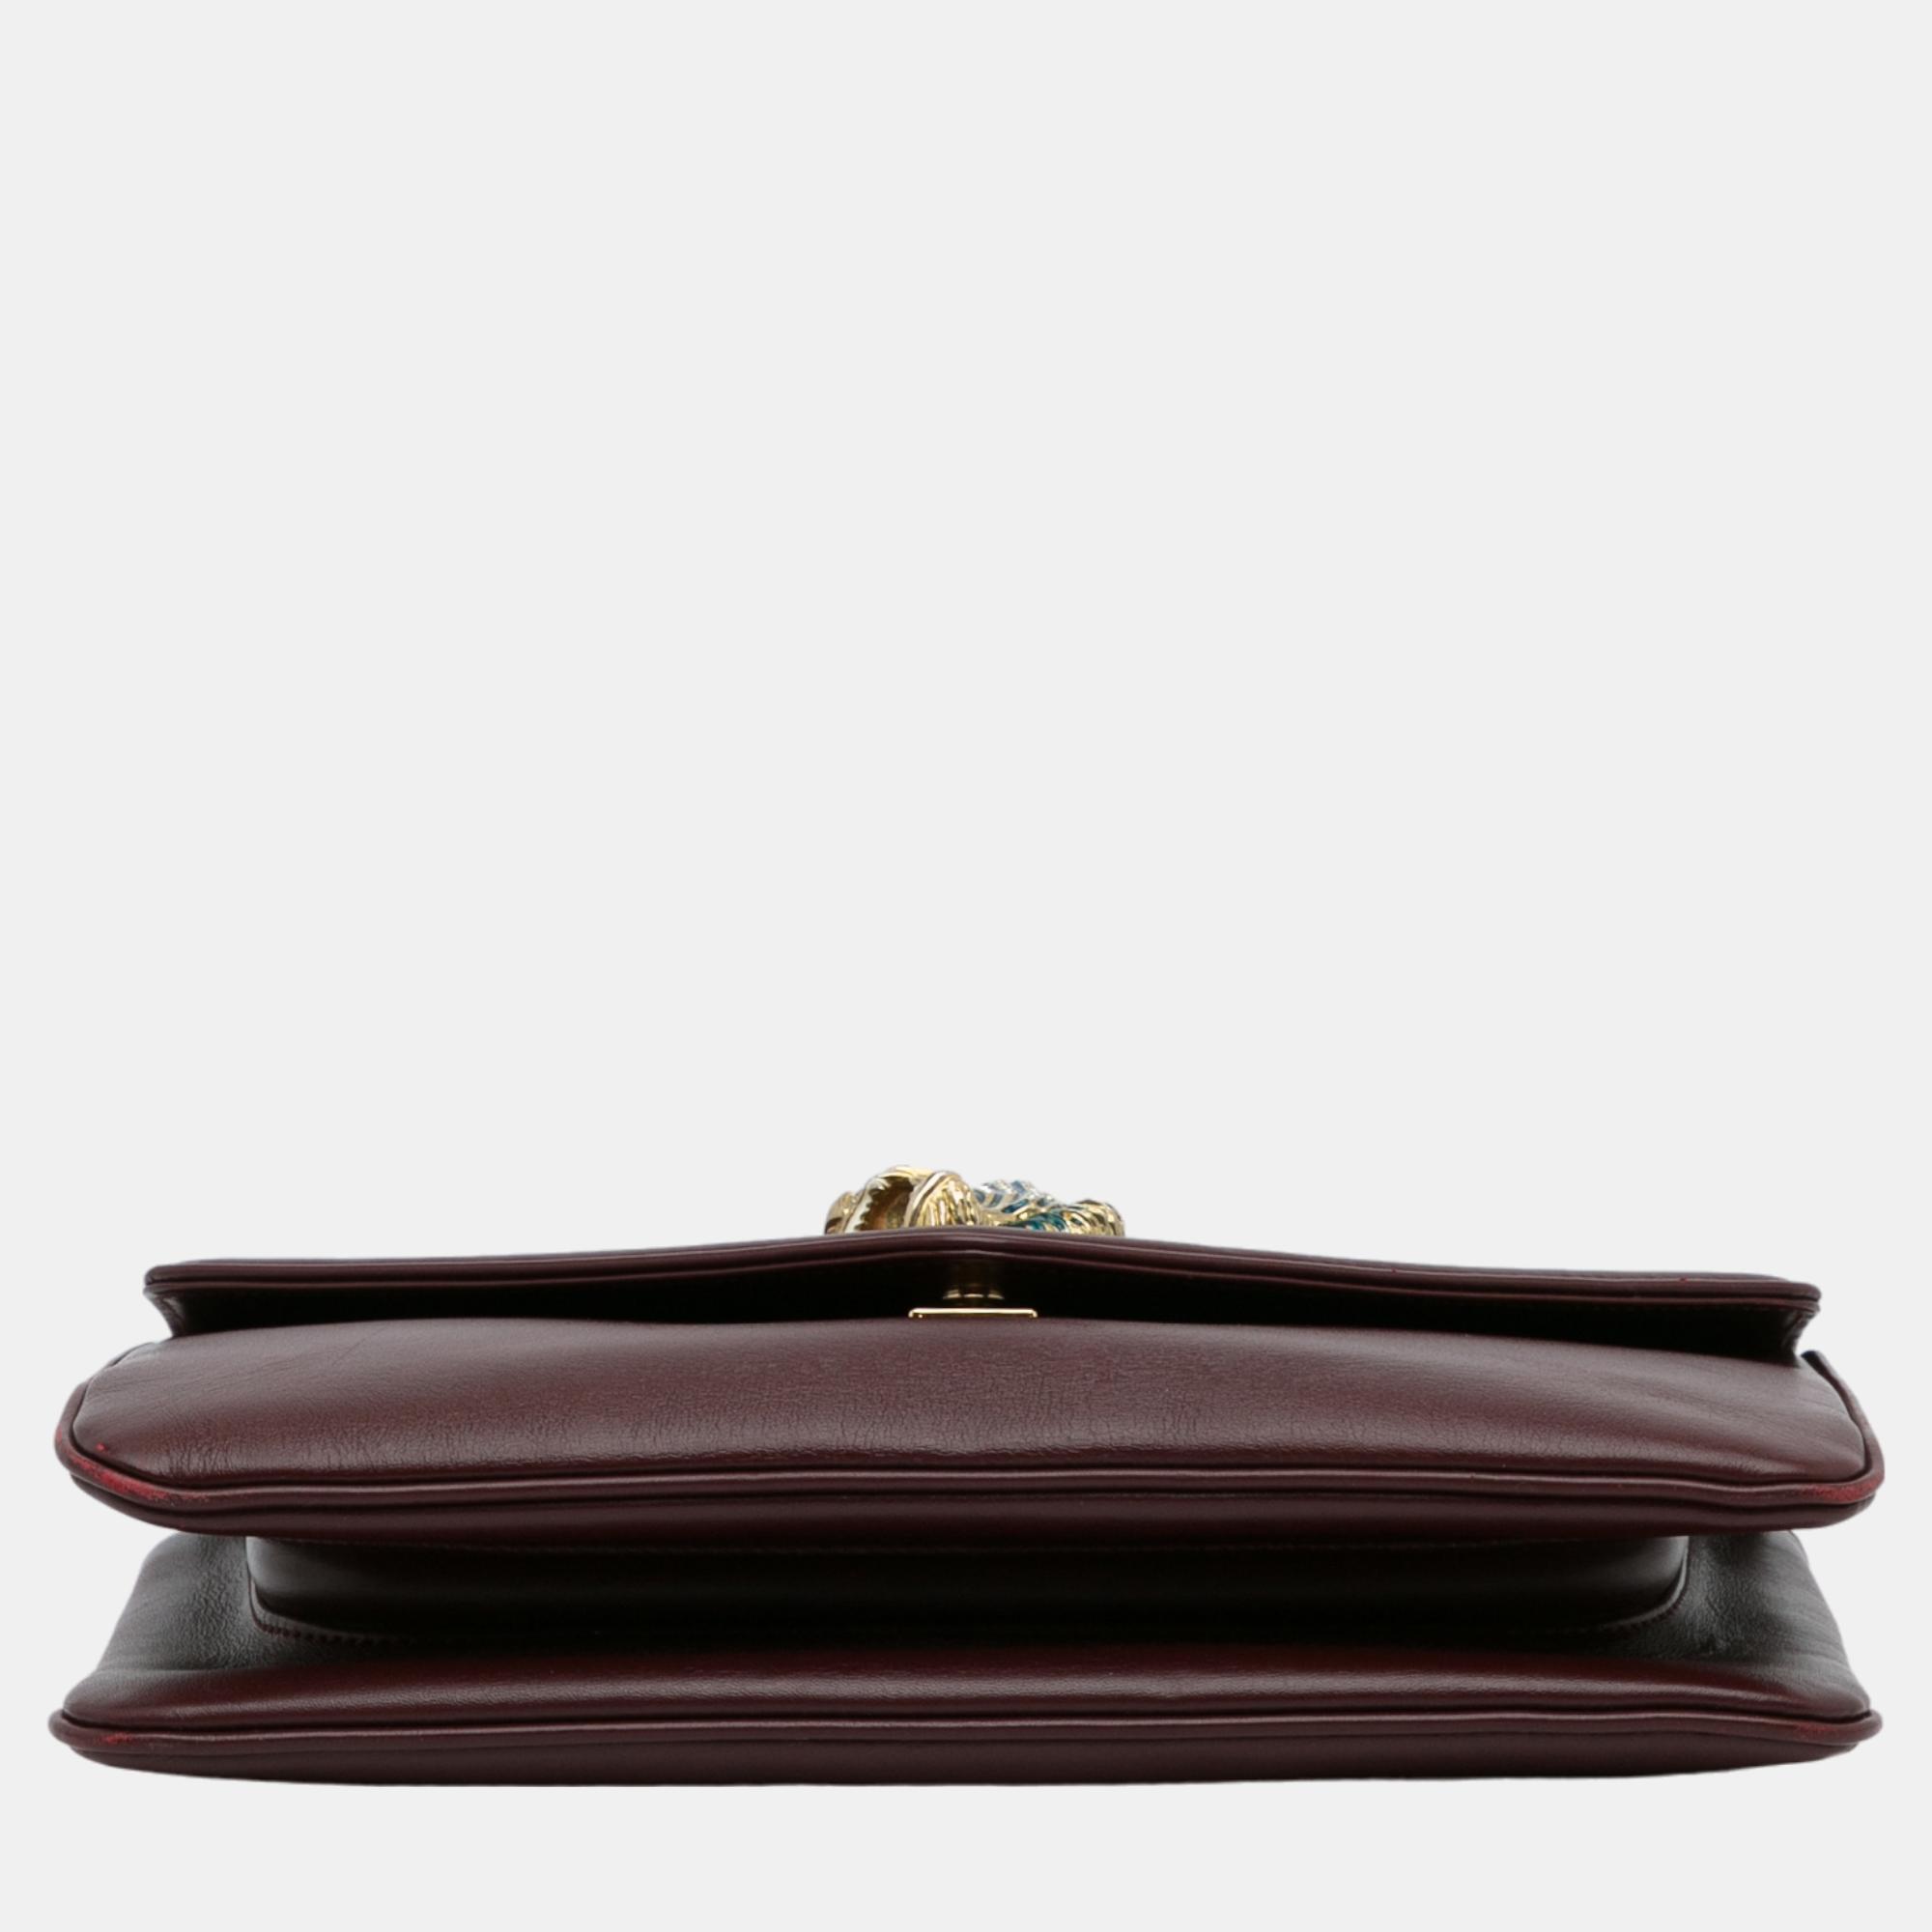 Gucci Burgundy Medium Rajah Crossbody Bag